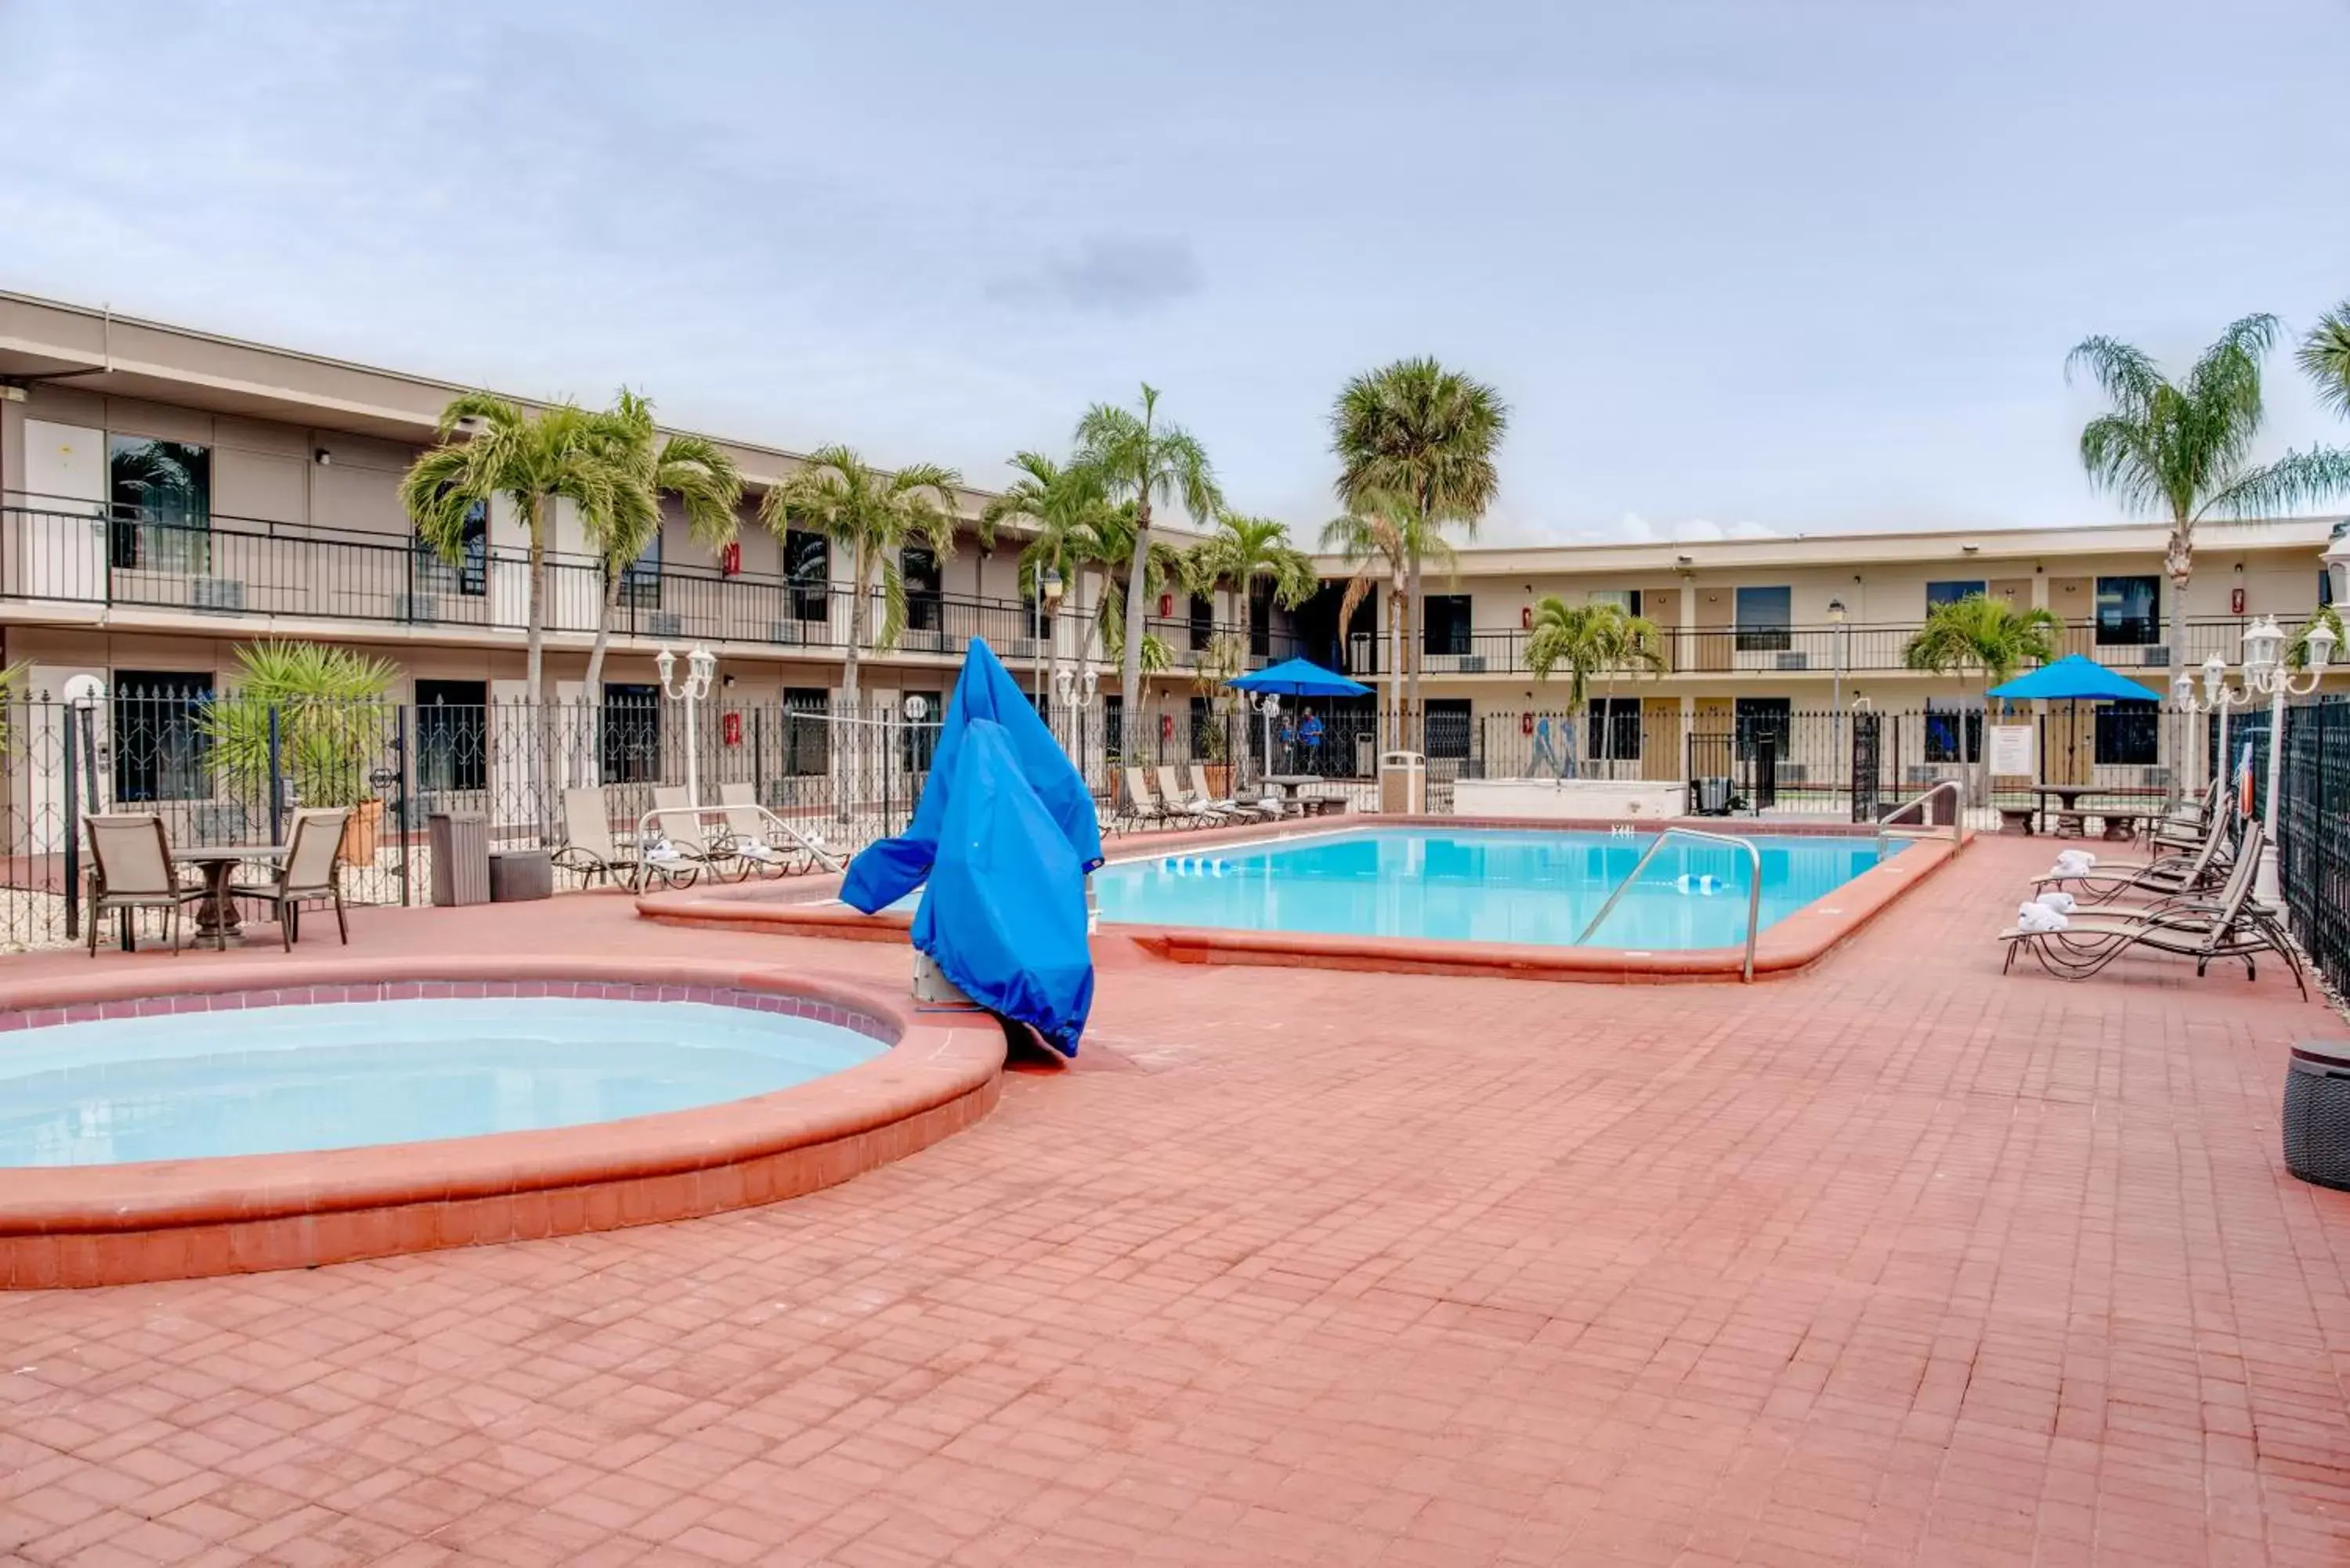 Swimming Pool in Days Inn by Wyndham St. Petersburg / Tampa Bay Area